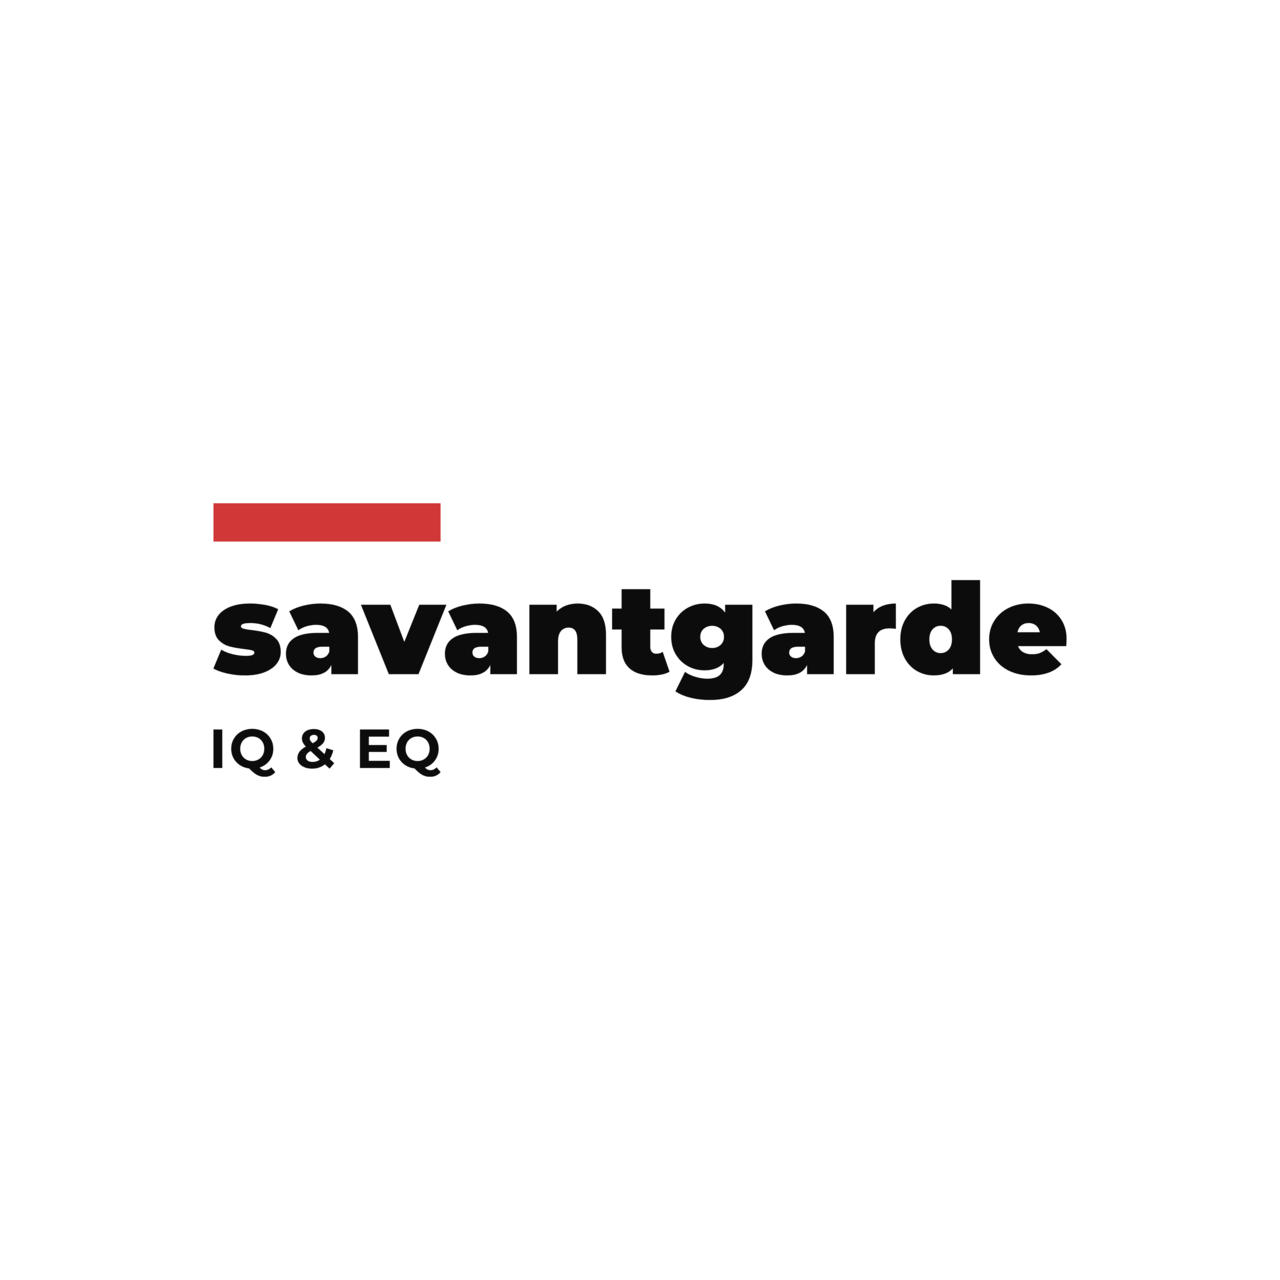 Savantgarde